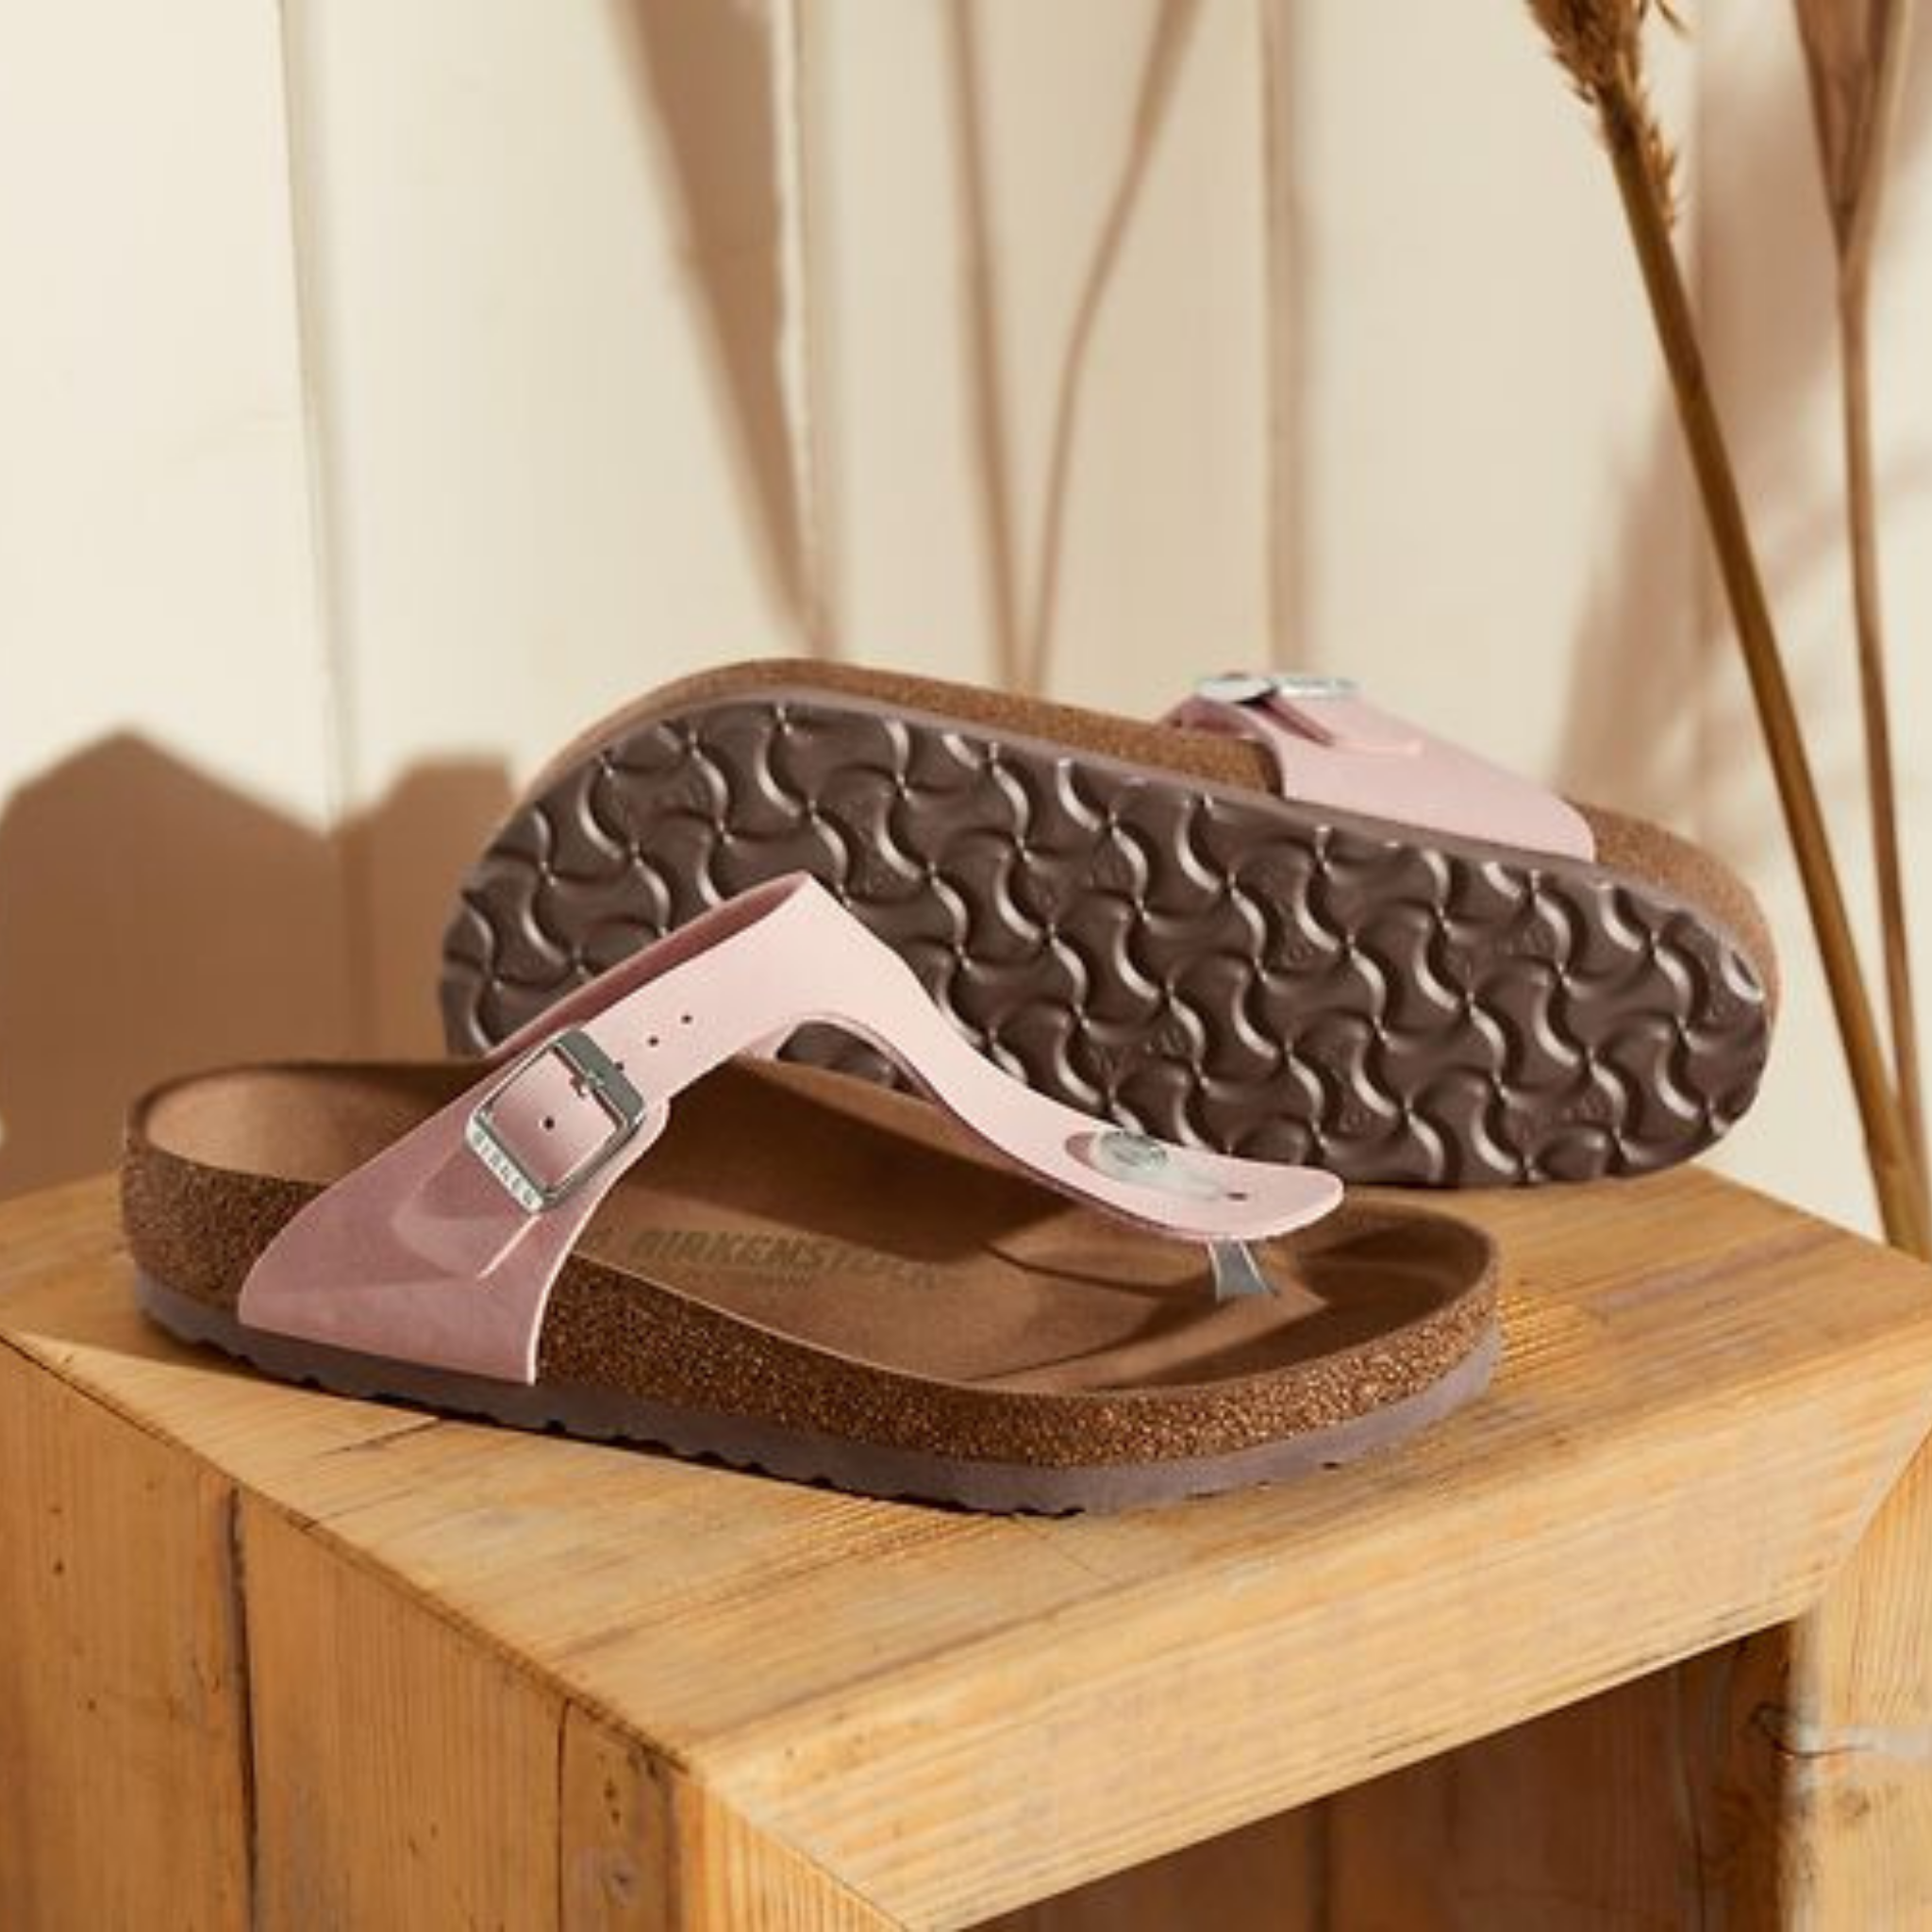 Pink Birkenstock sandals on a wood side table